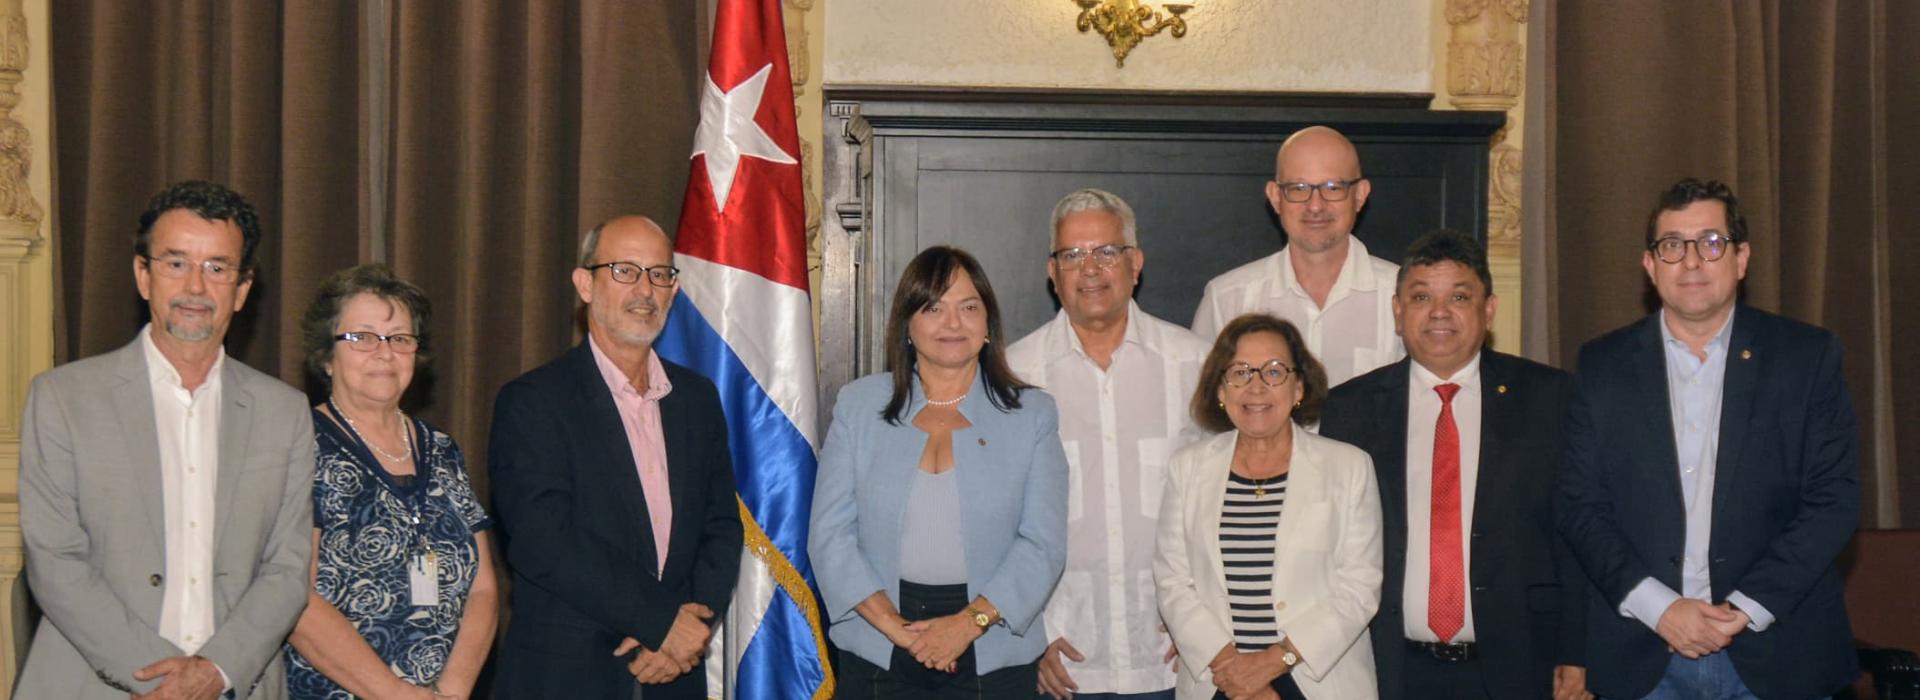 cuban-and-brazilian-mps-strengthen-parliamentary-ties